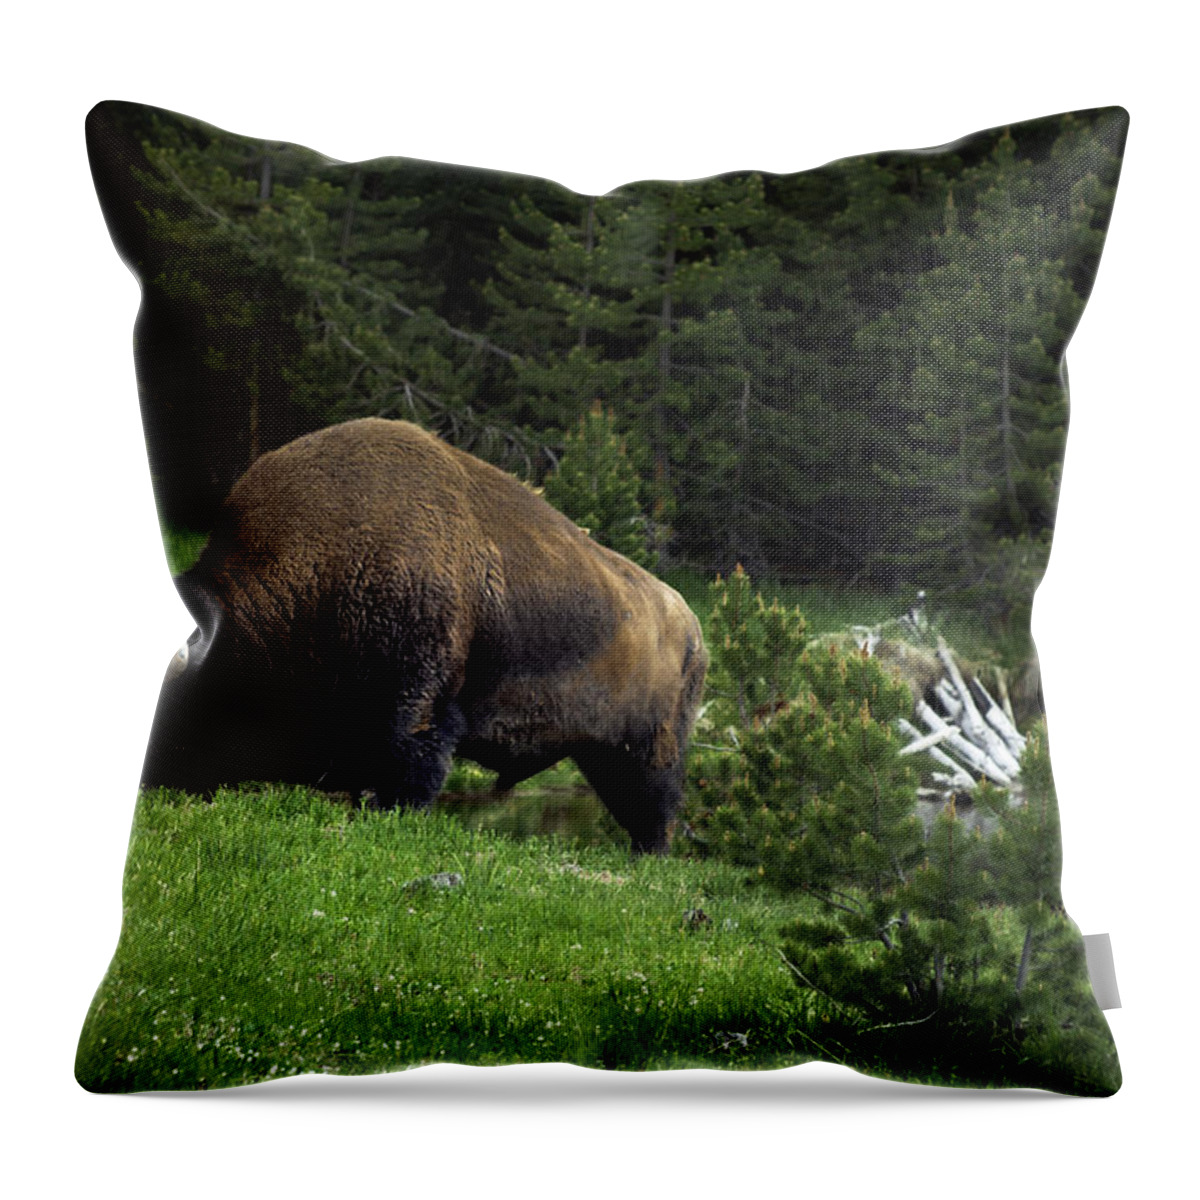 Yellowstone National Park Throw Pillow featuring the photograph Feeding Buffalo by Jason Moynihan